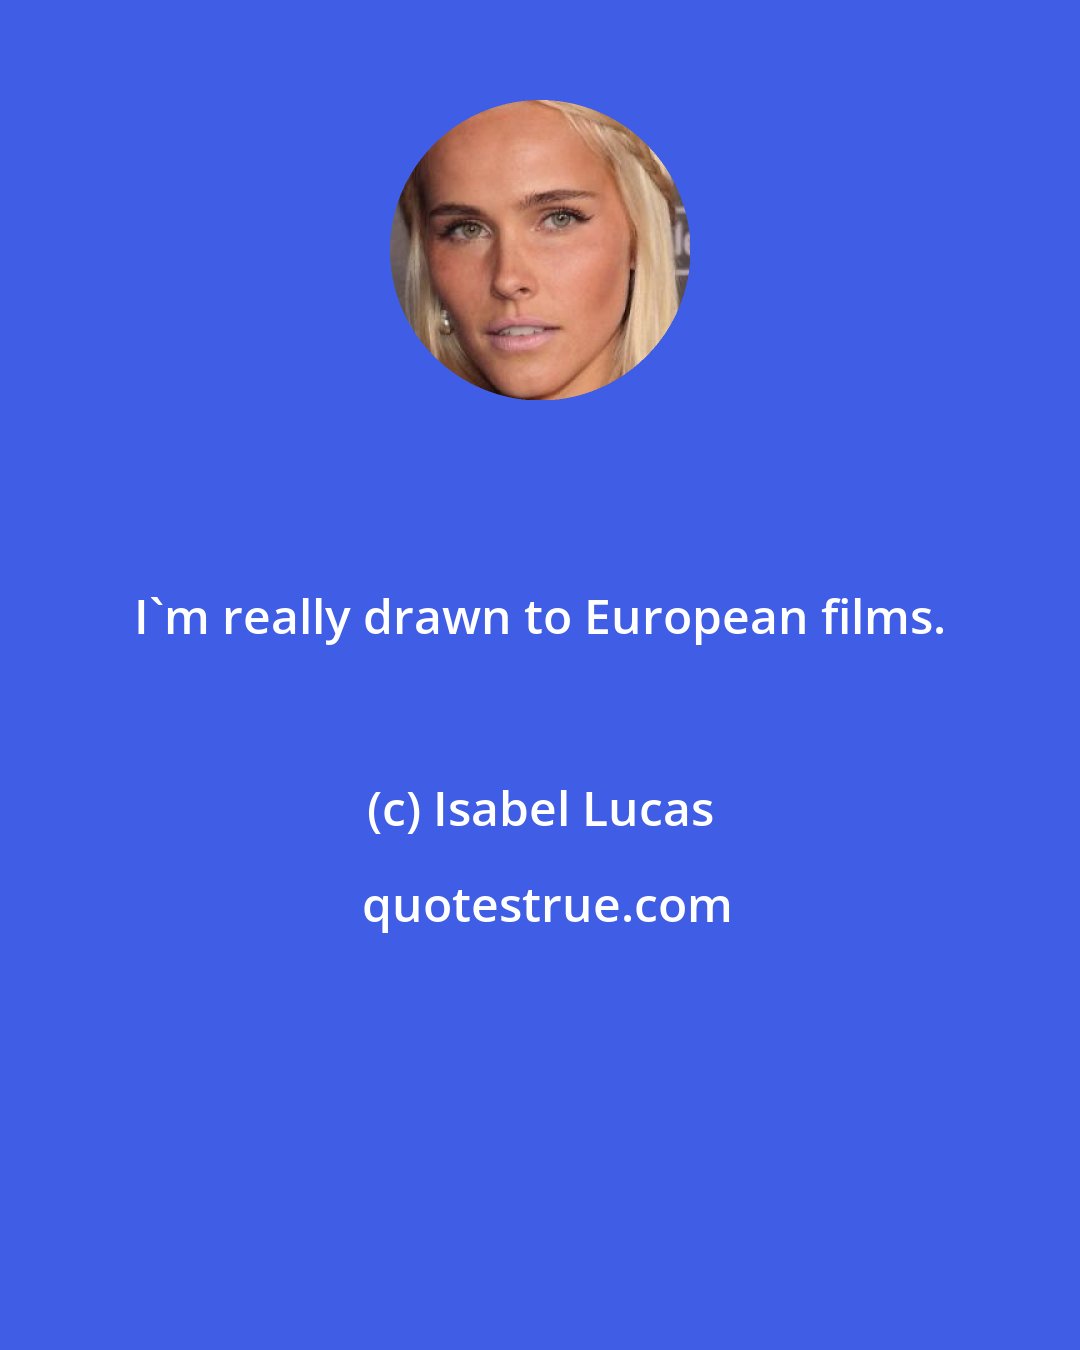 Isabel Lucas: I'm really drawn to European films.